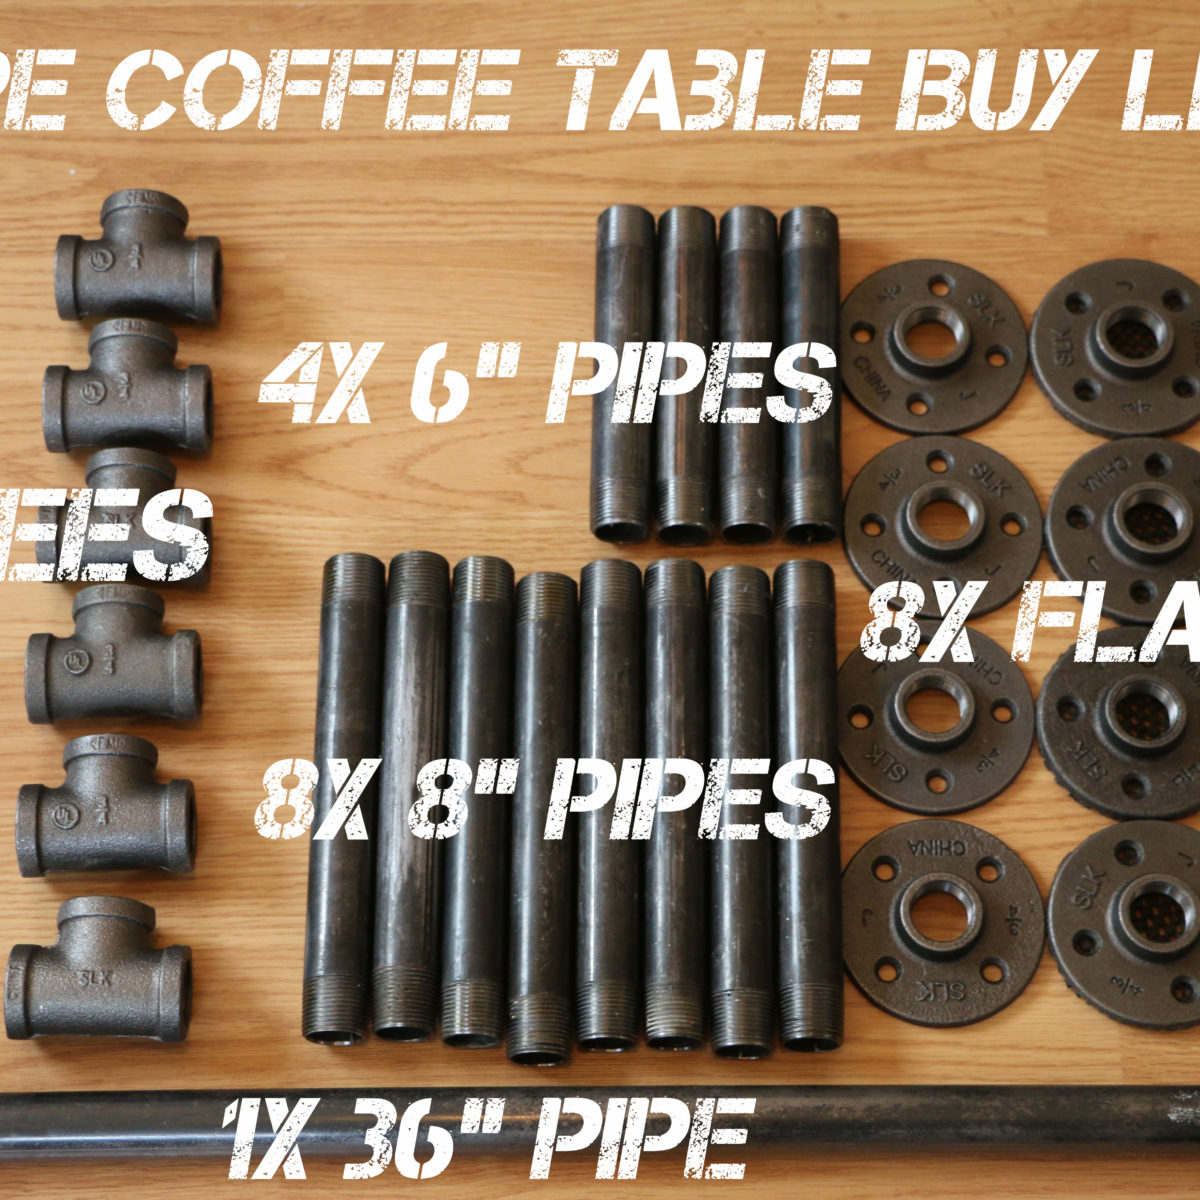 Pipe leg coffee table